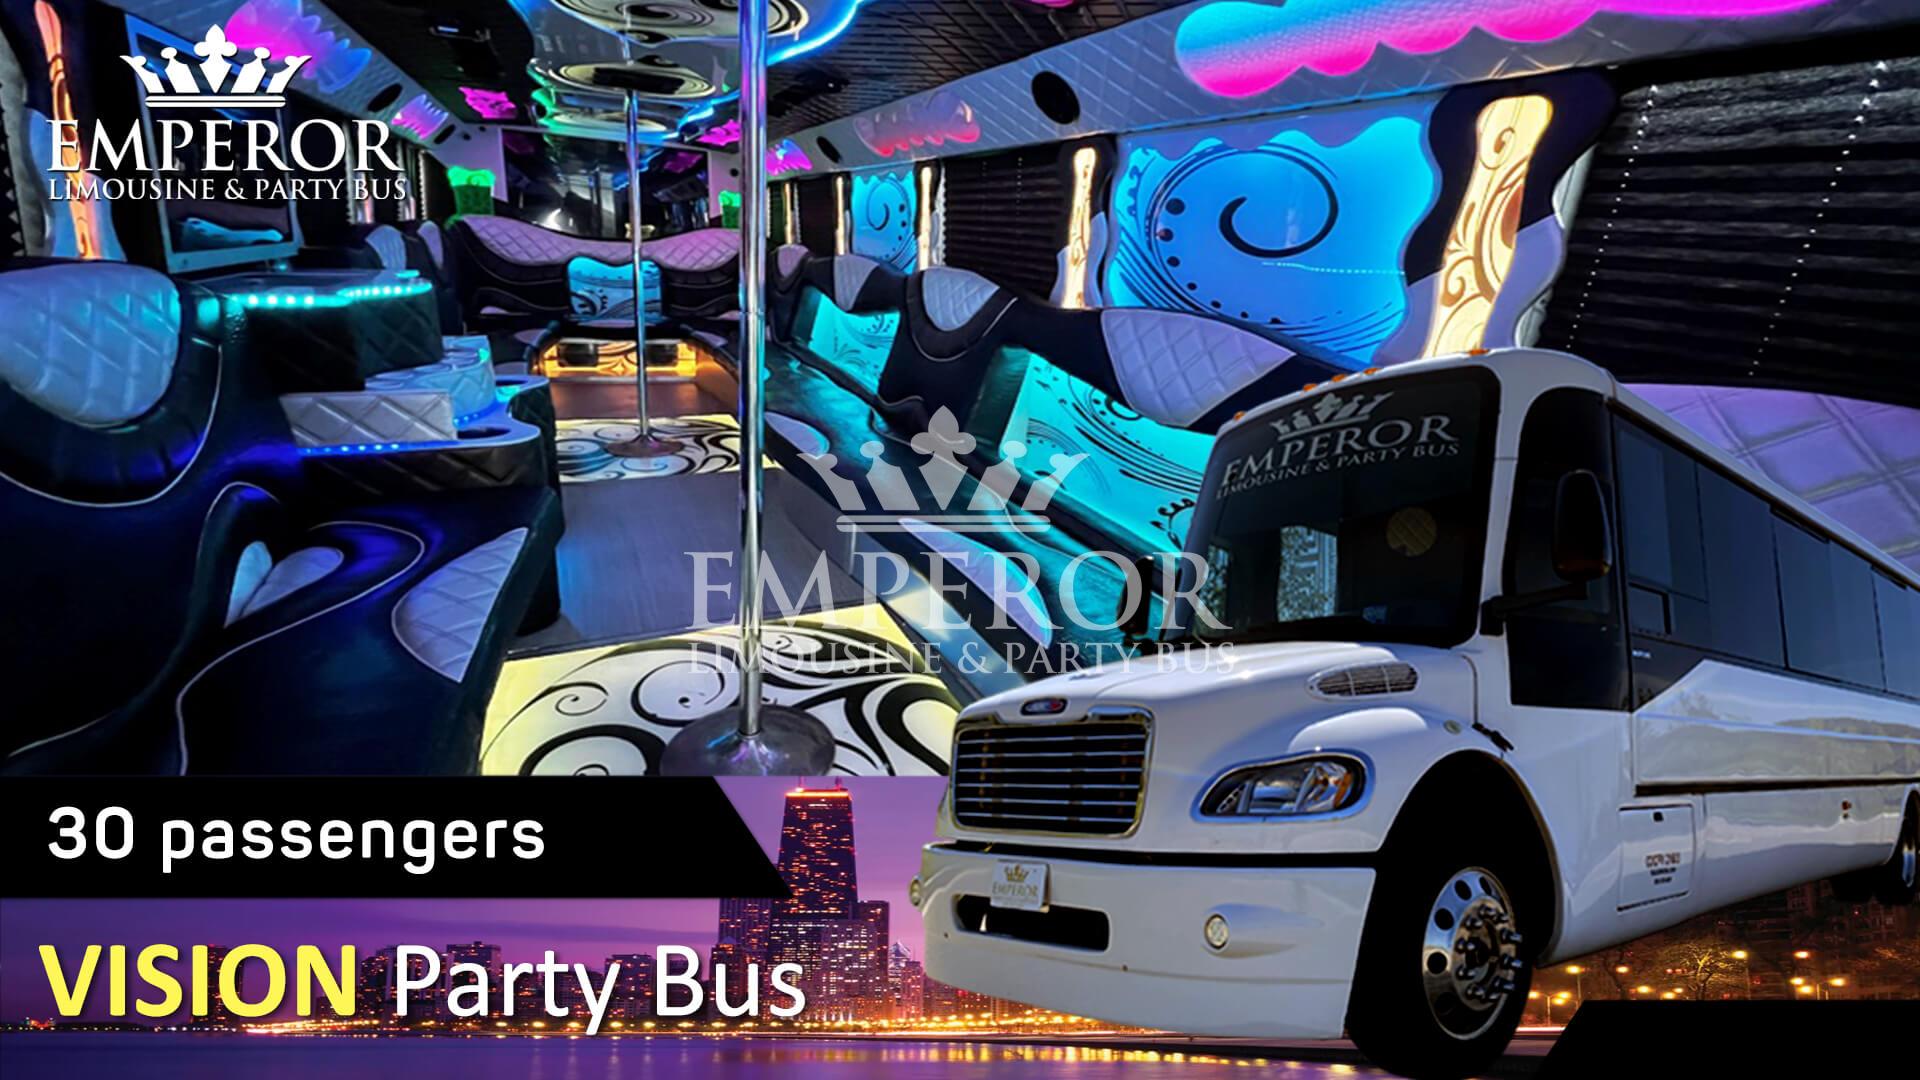 Batavia party bus - Vision Edition